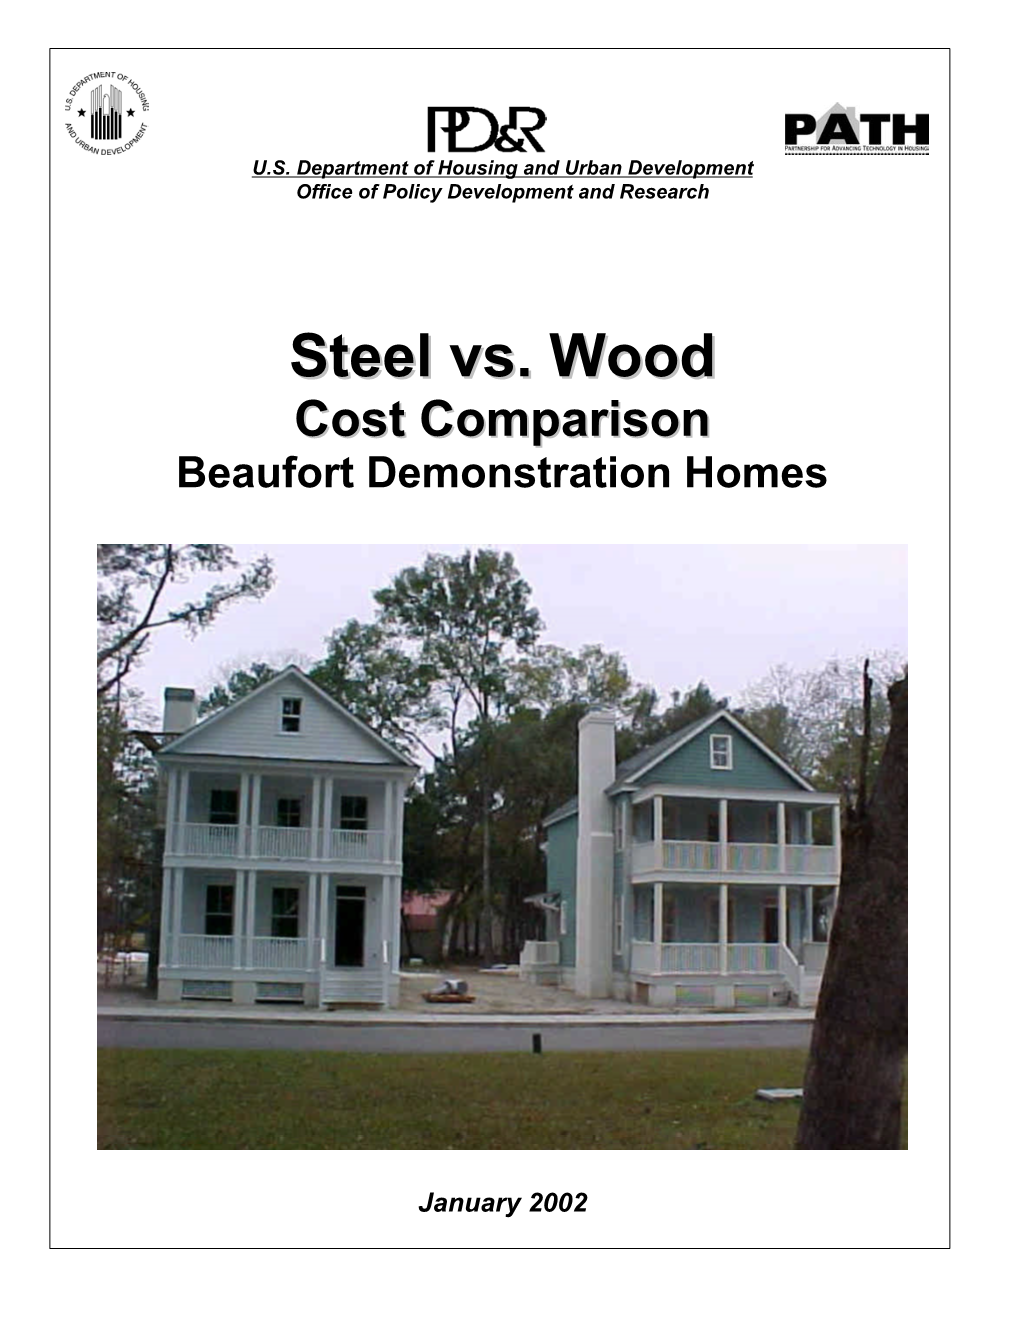 Steel Vs. Wood Cost Comparison: Beaufort Demonstration Homes